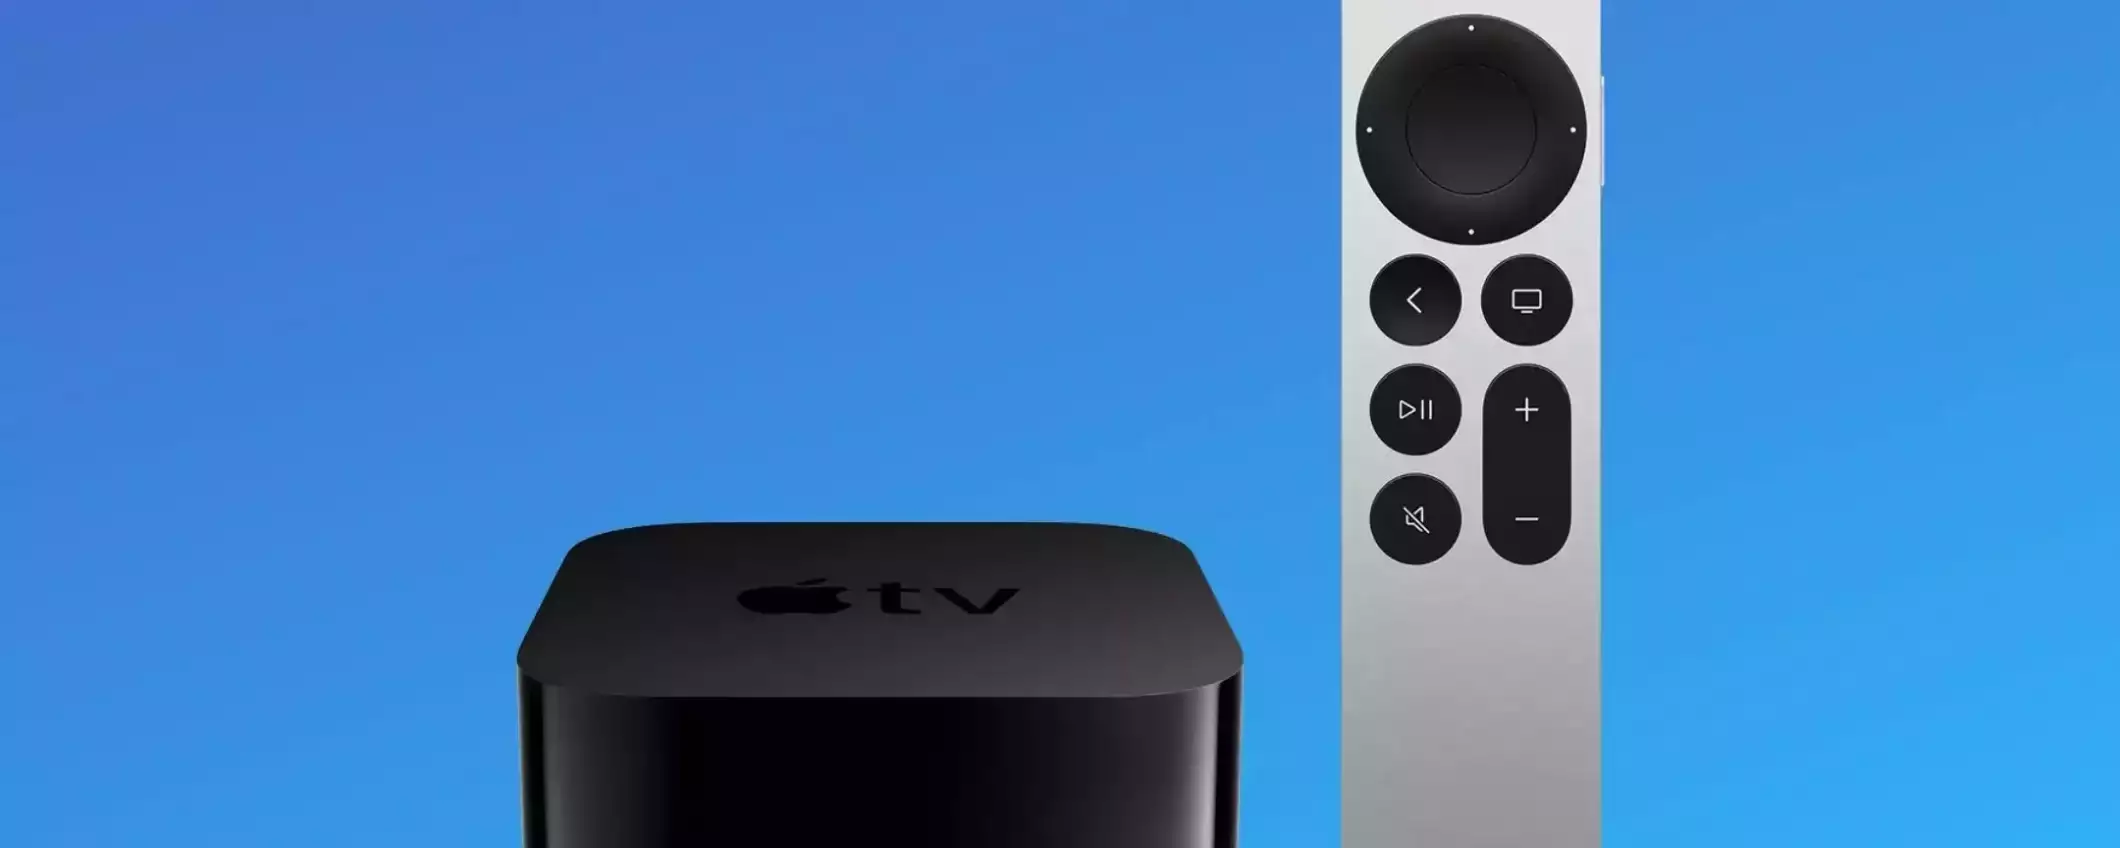 Apple TV 4K (64 GB): OGGI la trovi a soli 159€ su Amazon